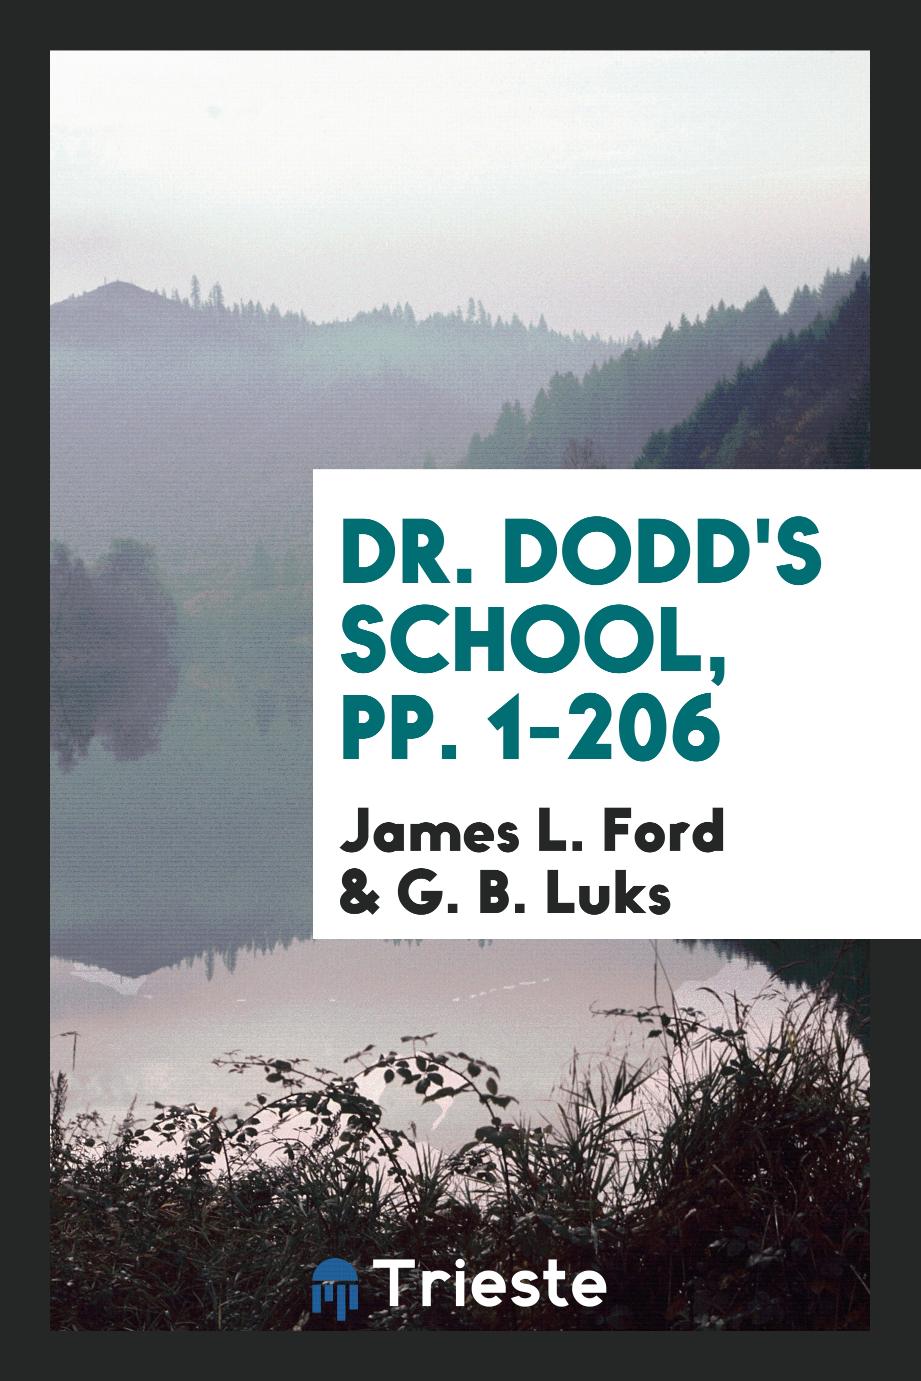 James L. Ford, G. B. Luks - Dr. Dodd's School, pp. 1-206